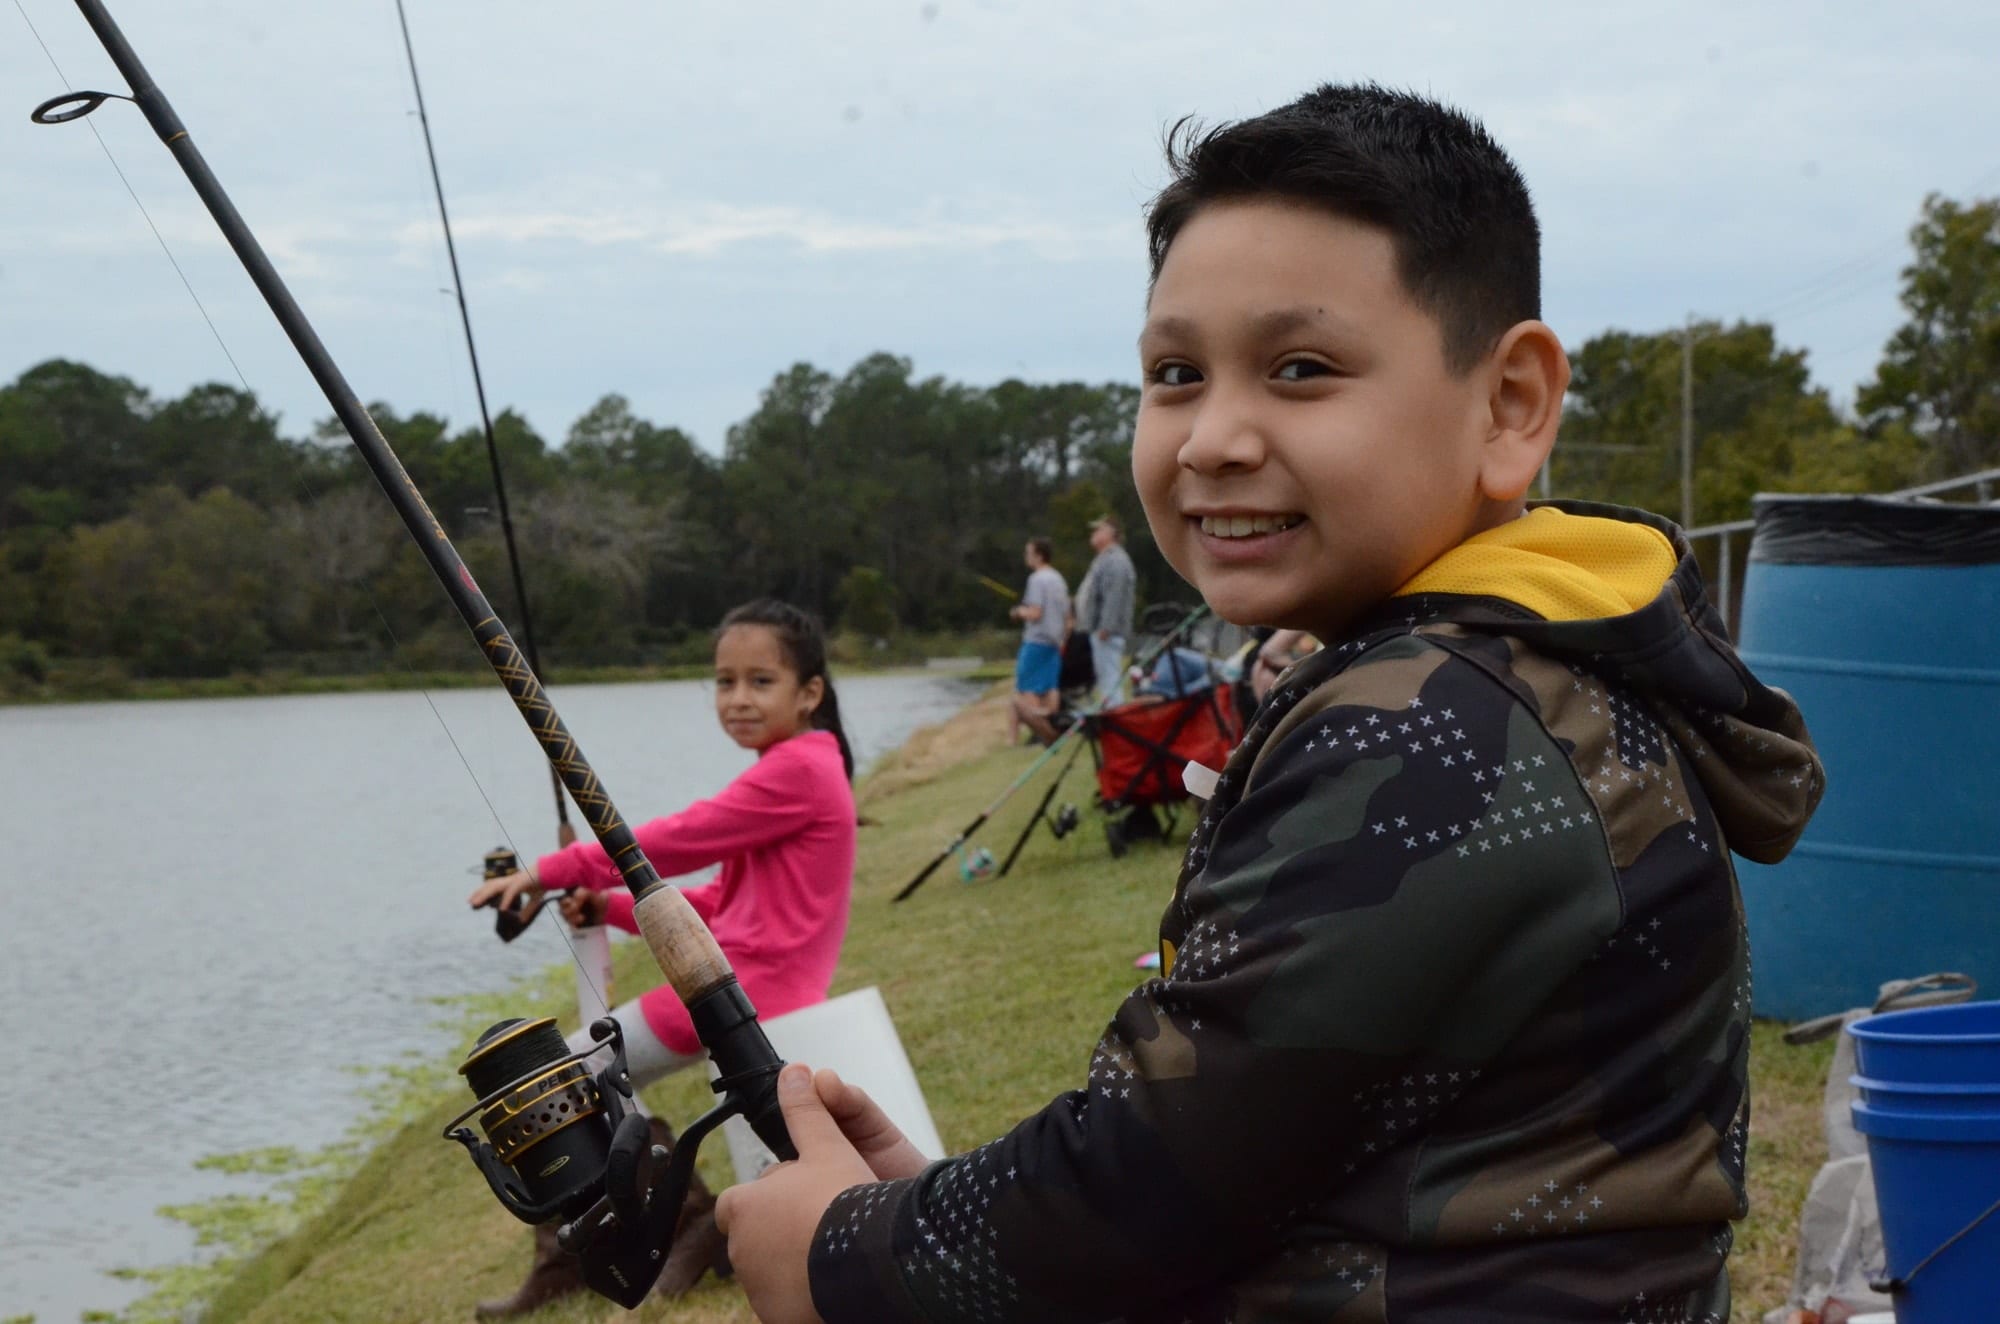 Youth Fishing Derby kicks off December